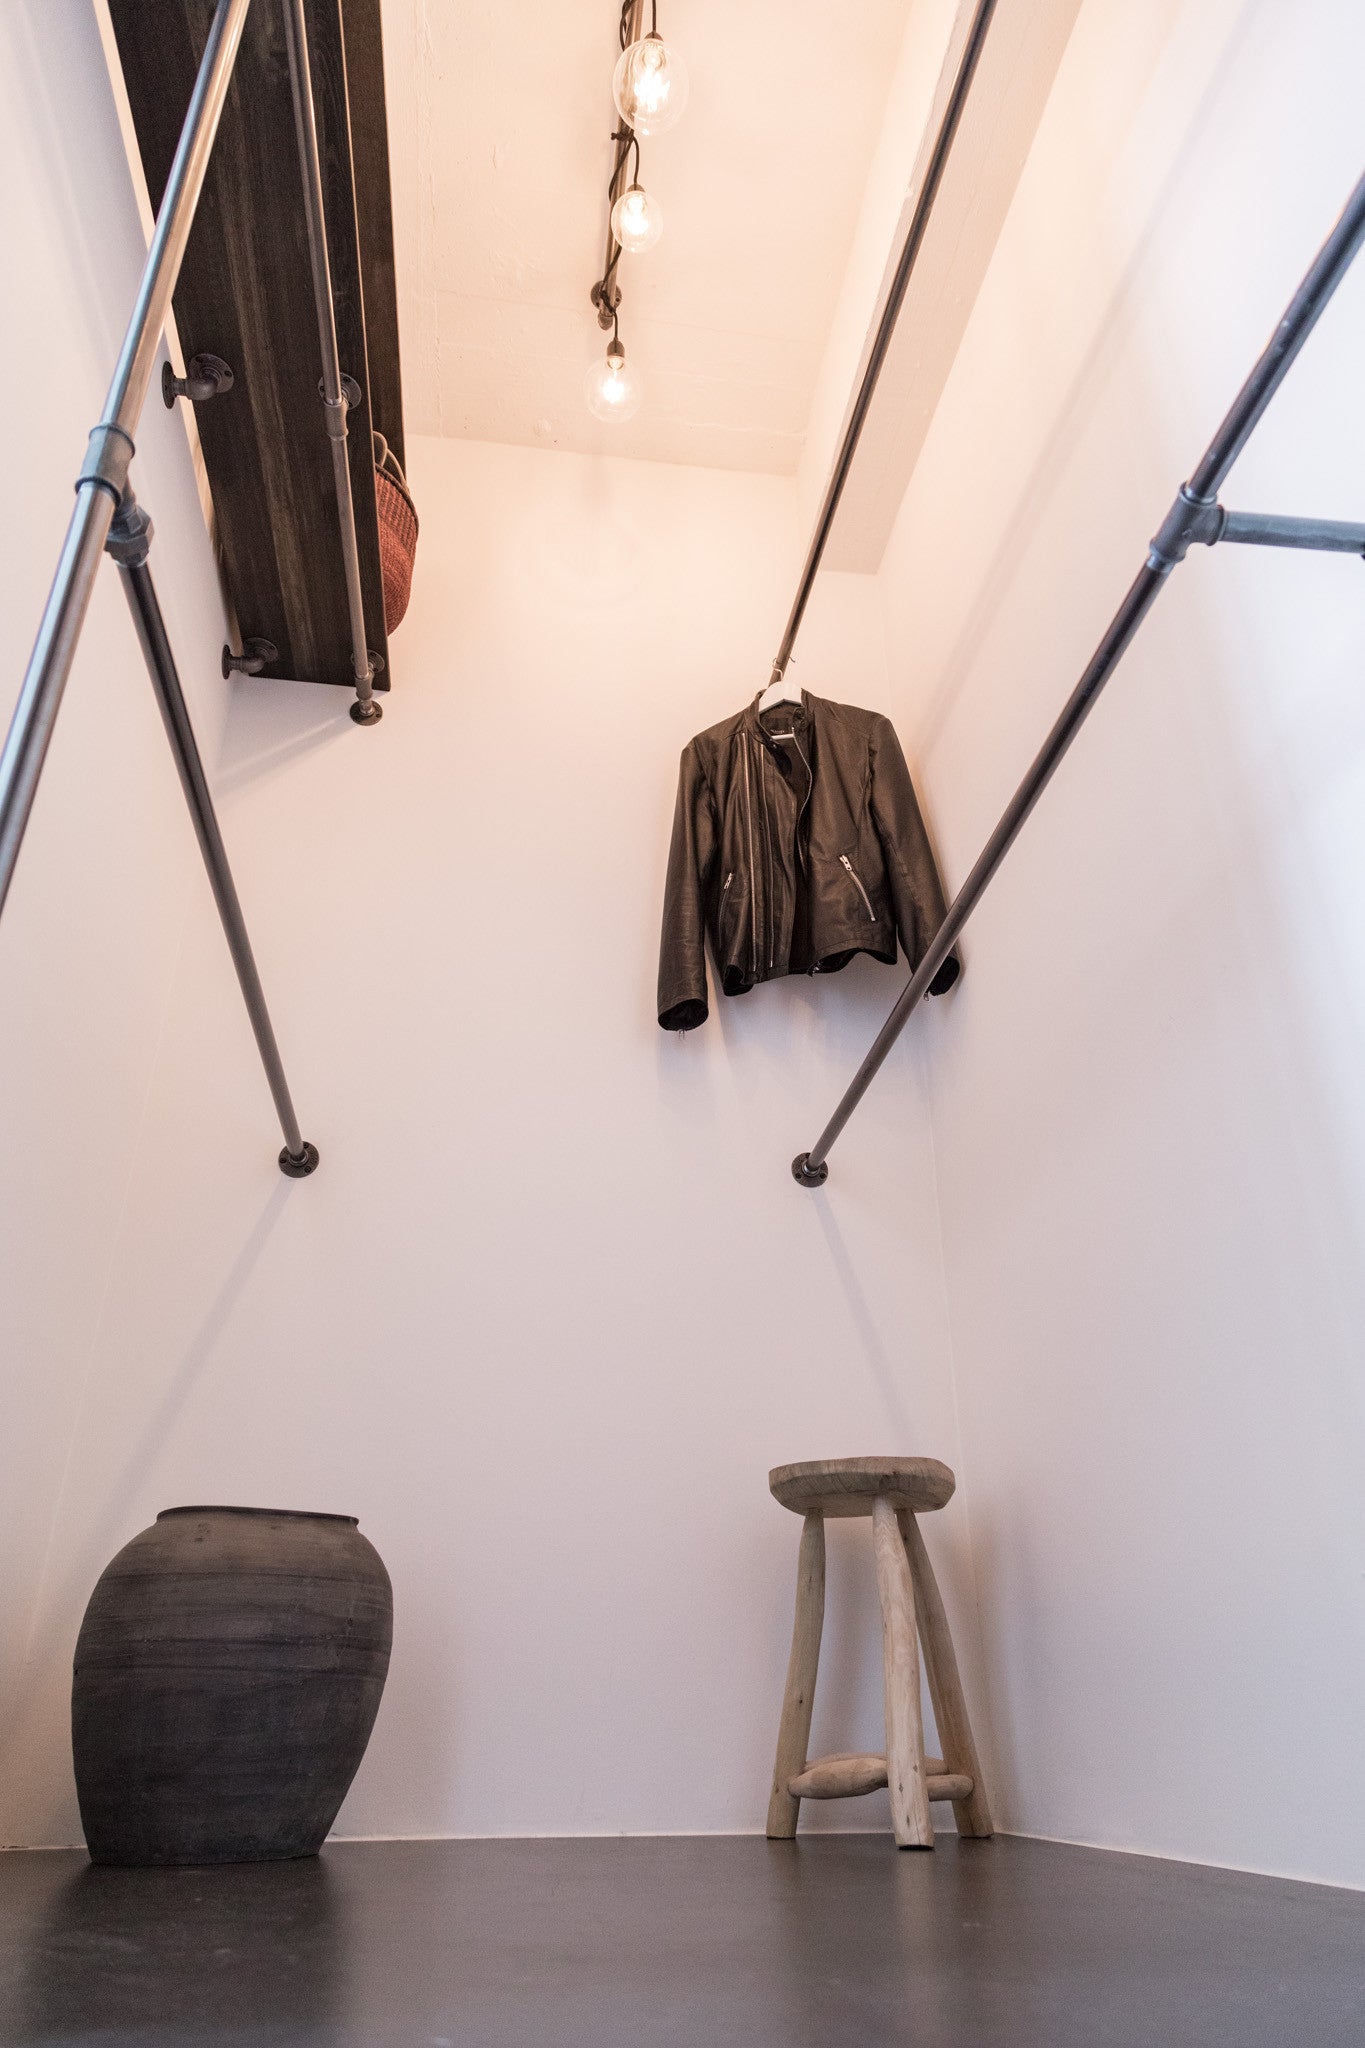 Walk -in Closet Solution in Stay Copenaghen - Design industriale di RackBuddy